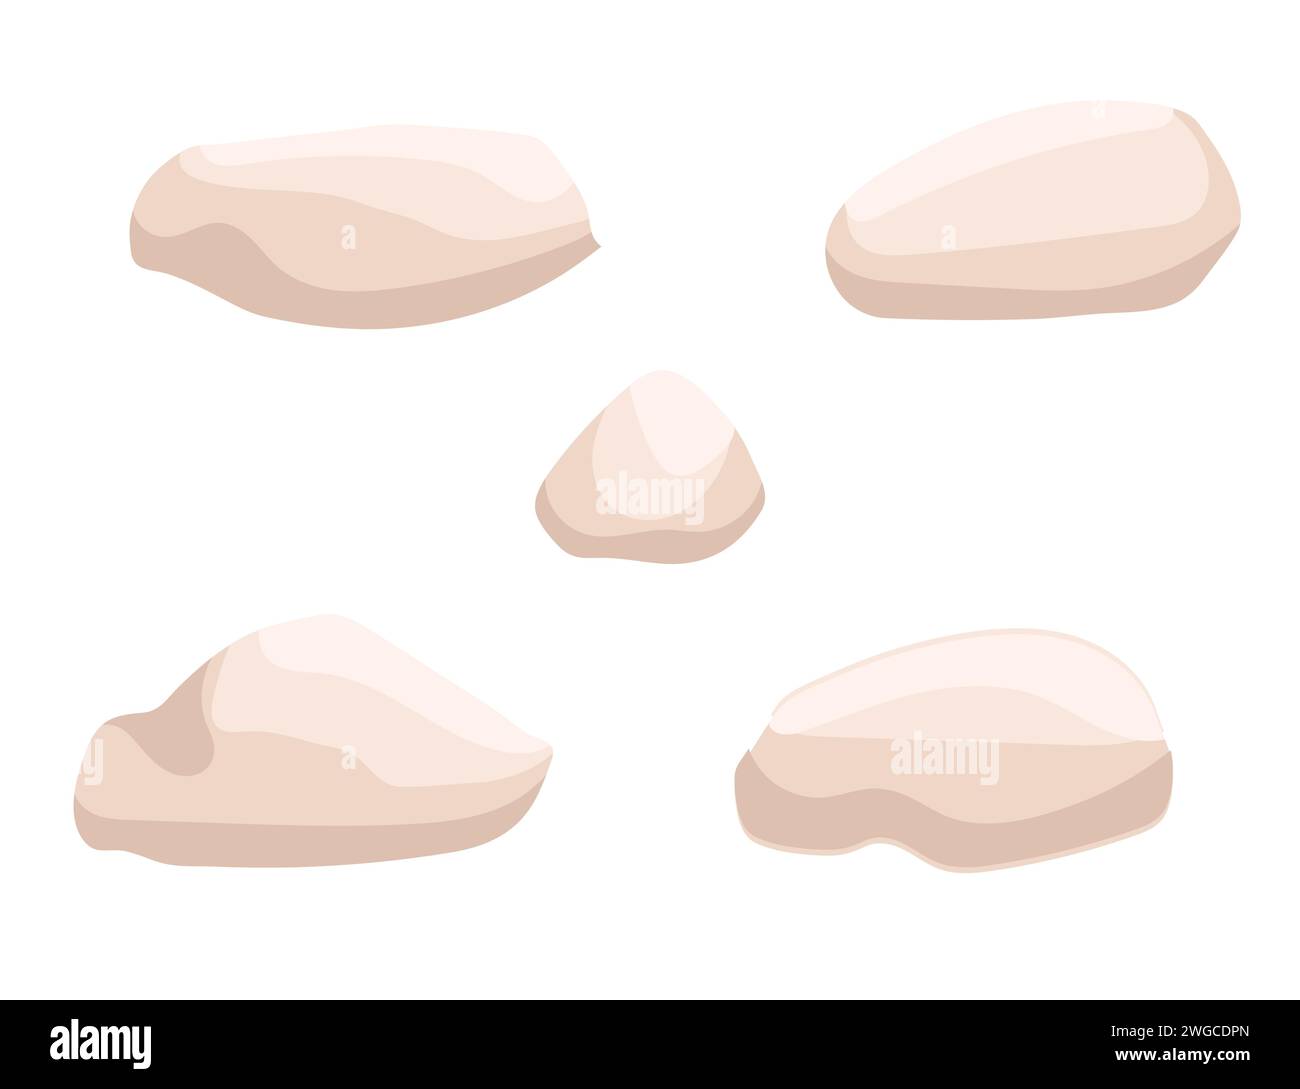 Set of white aquarium decorative stones vector illustration isolated on white background Stock Vector